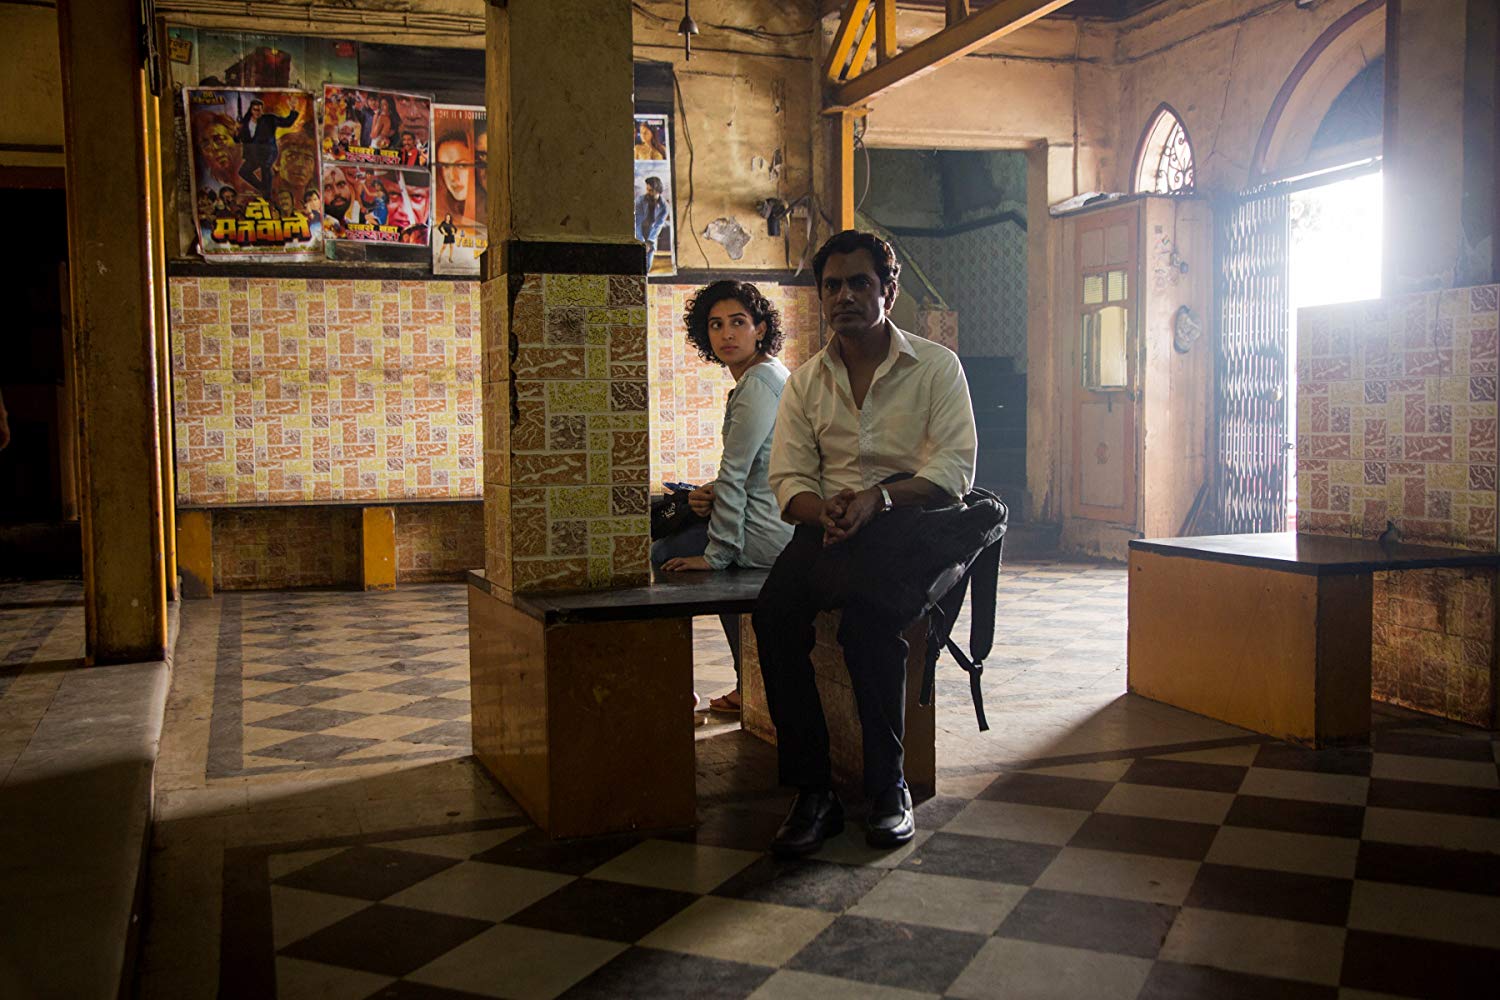 Sanya Malhotra and Nawazuddin Siddiqui in "Photograph."